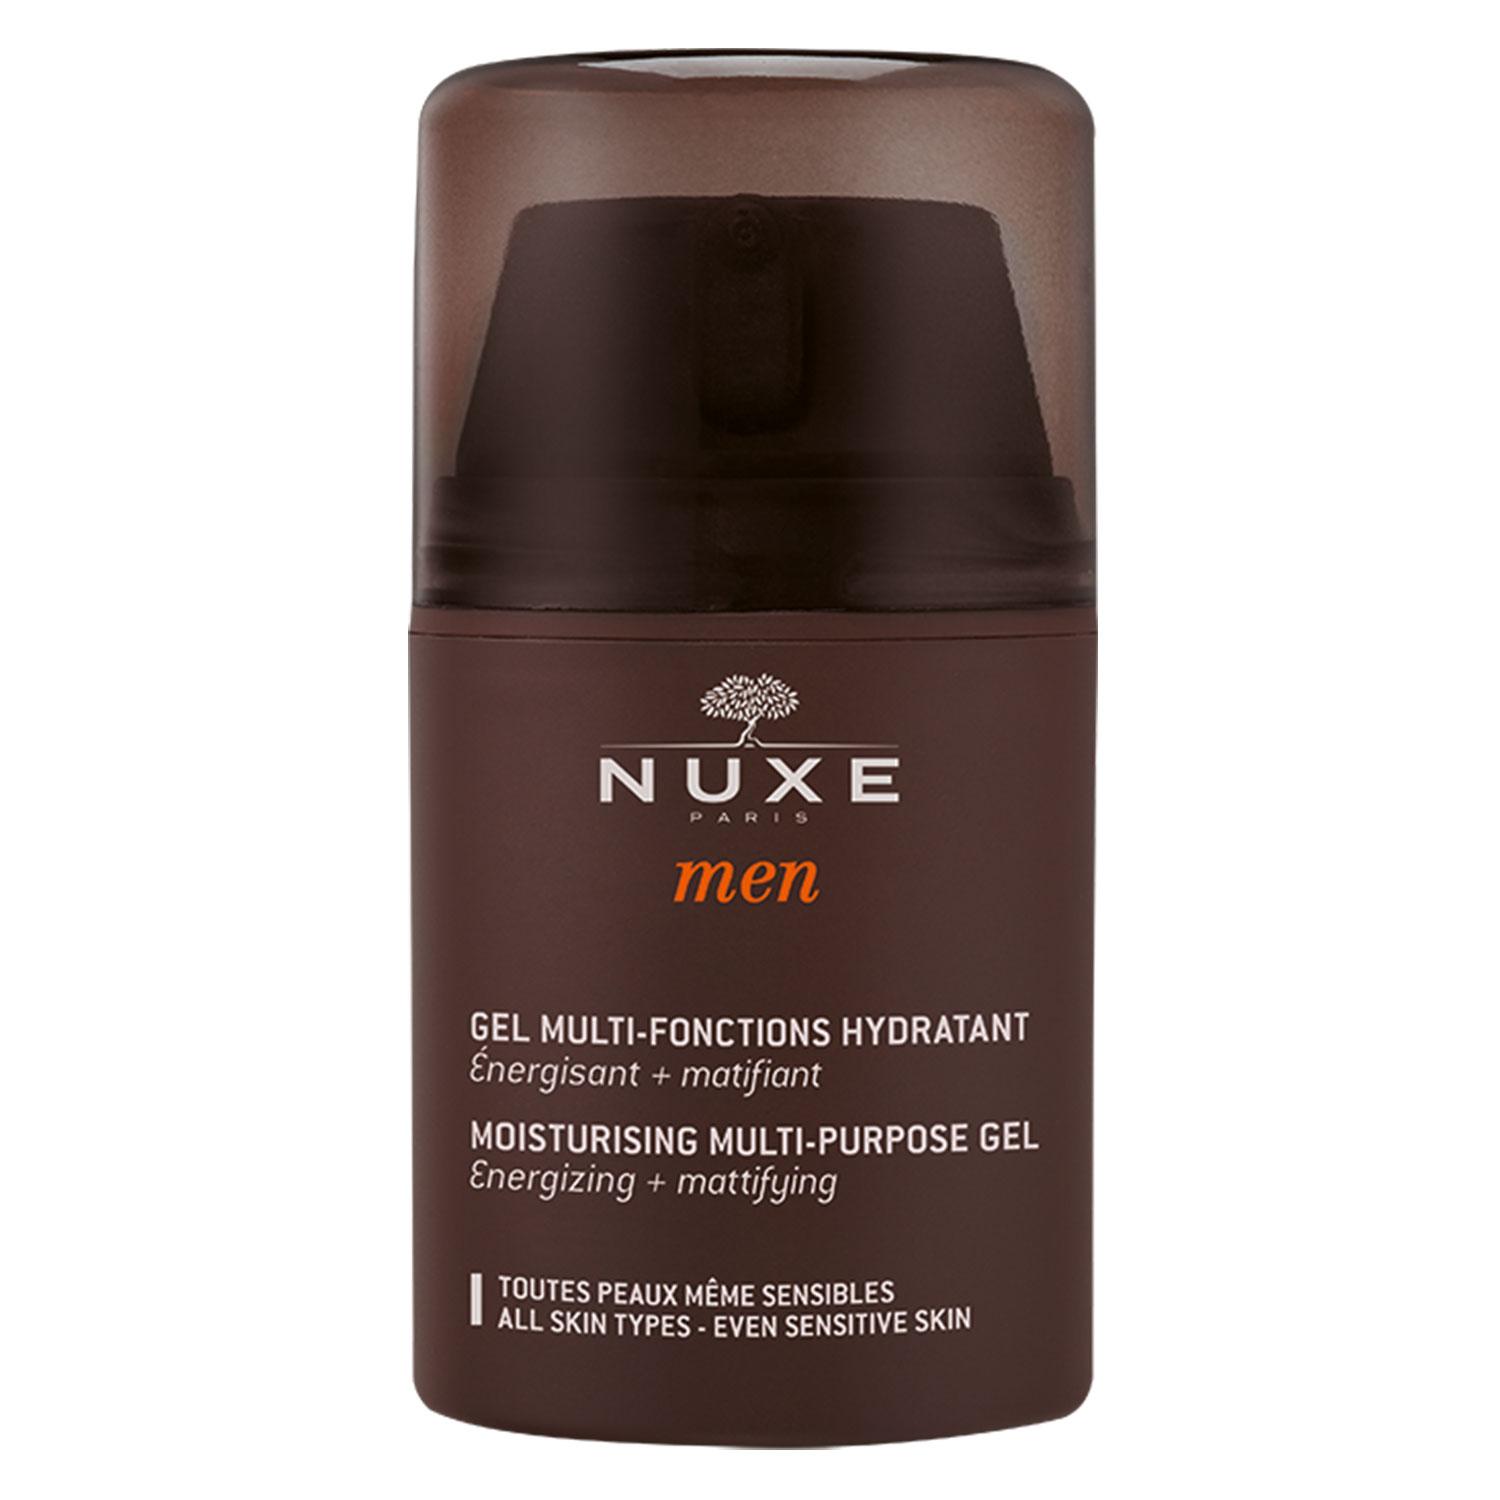 Nuxe Men - Gel multi-fonctions hydratant